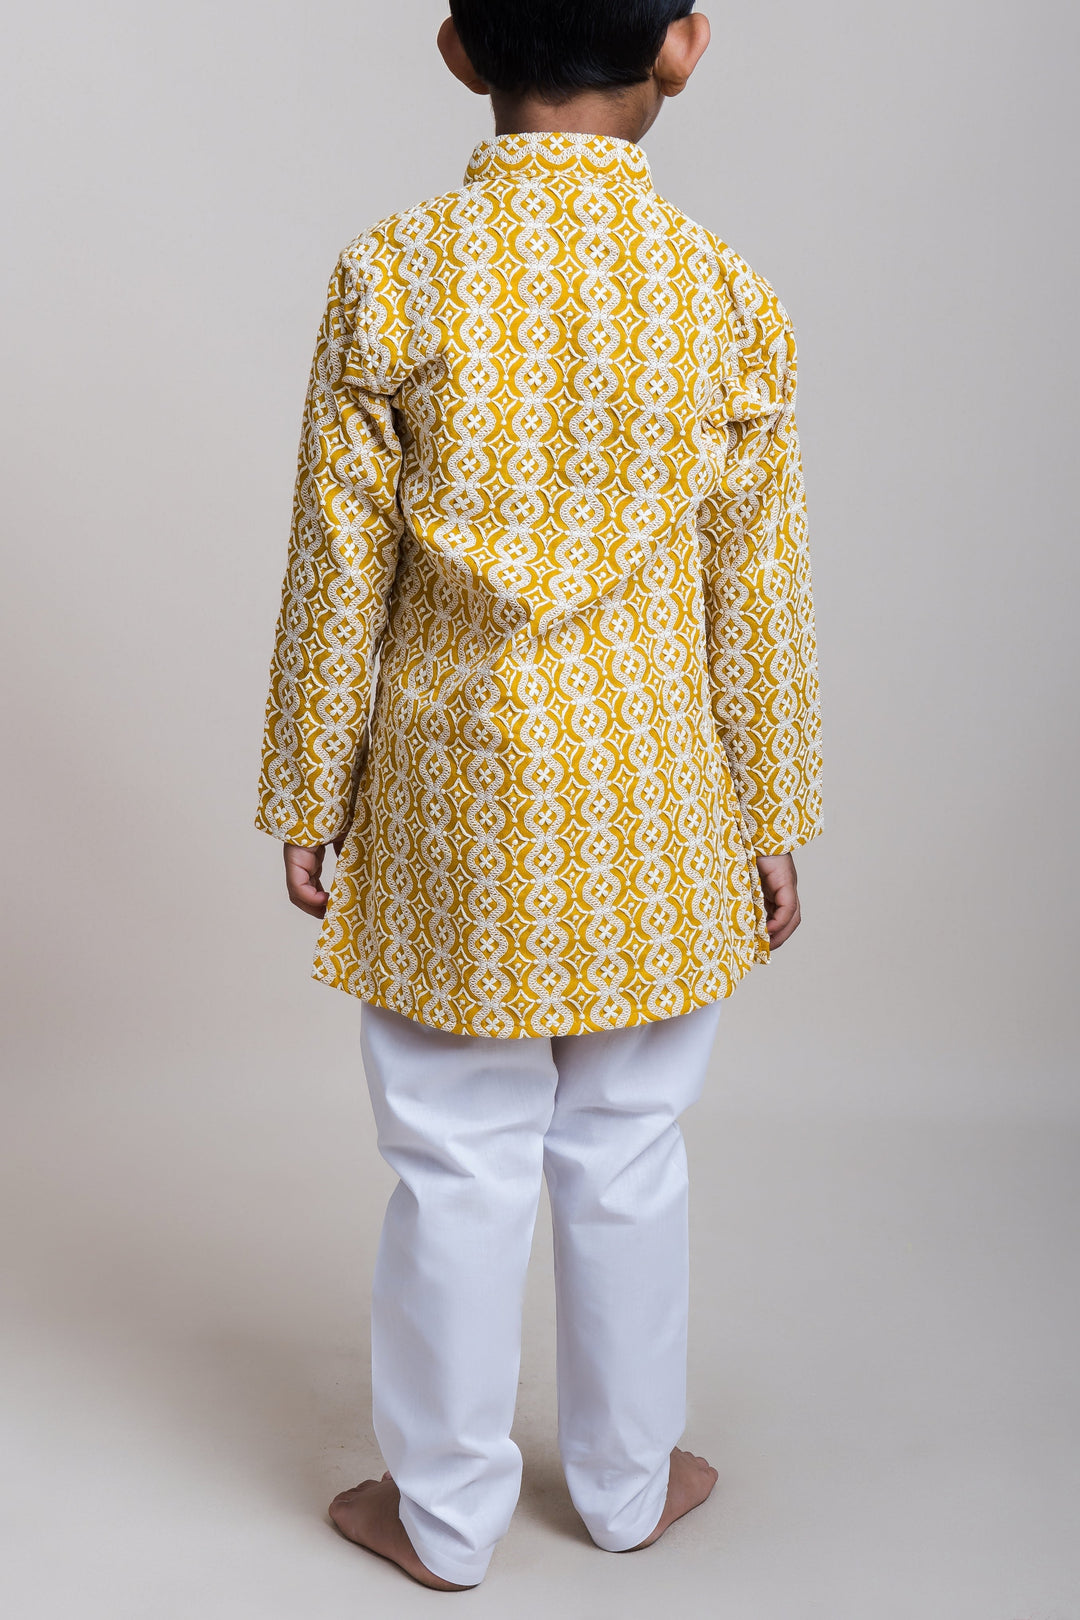 The Nesavu Boys Kurtha Set Embroidery Rich Yellow Kurta With White Pants For Little Boys Nesavu Best Ethnic Wear Collection For Boys| Exclusive Designs| The Nesavu